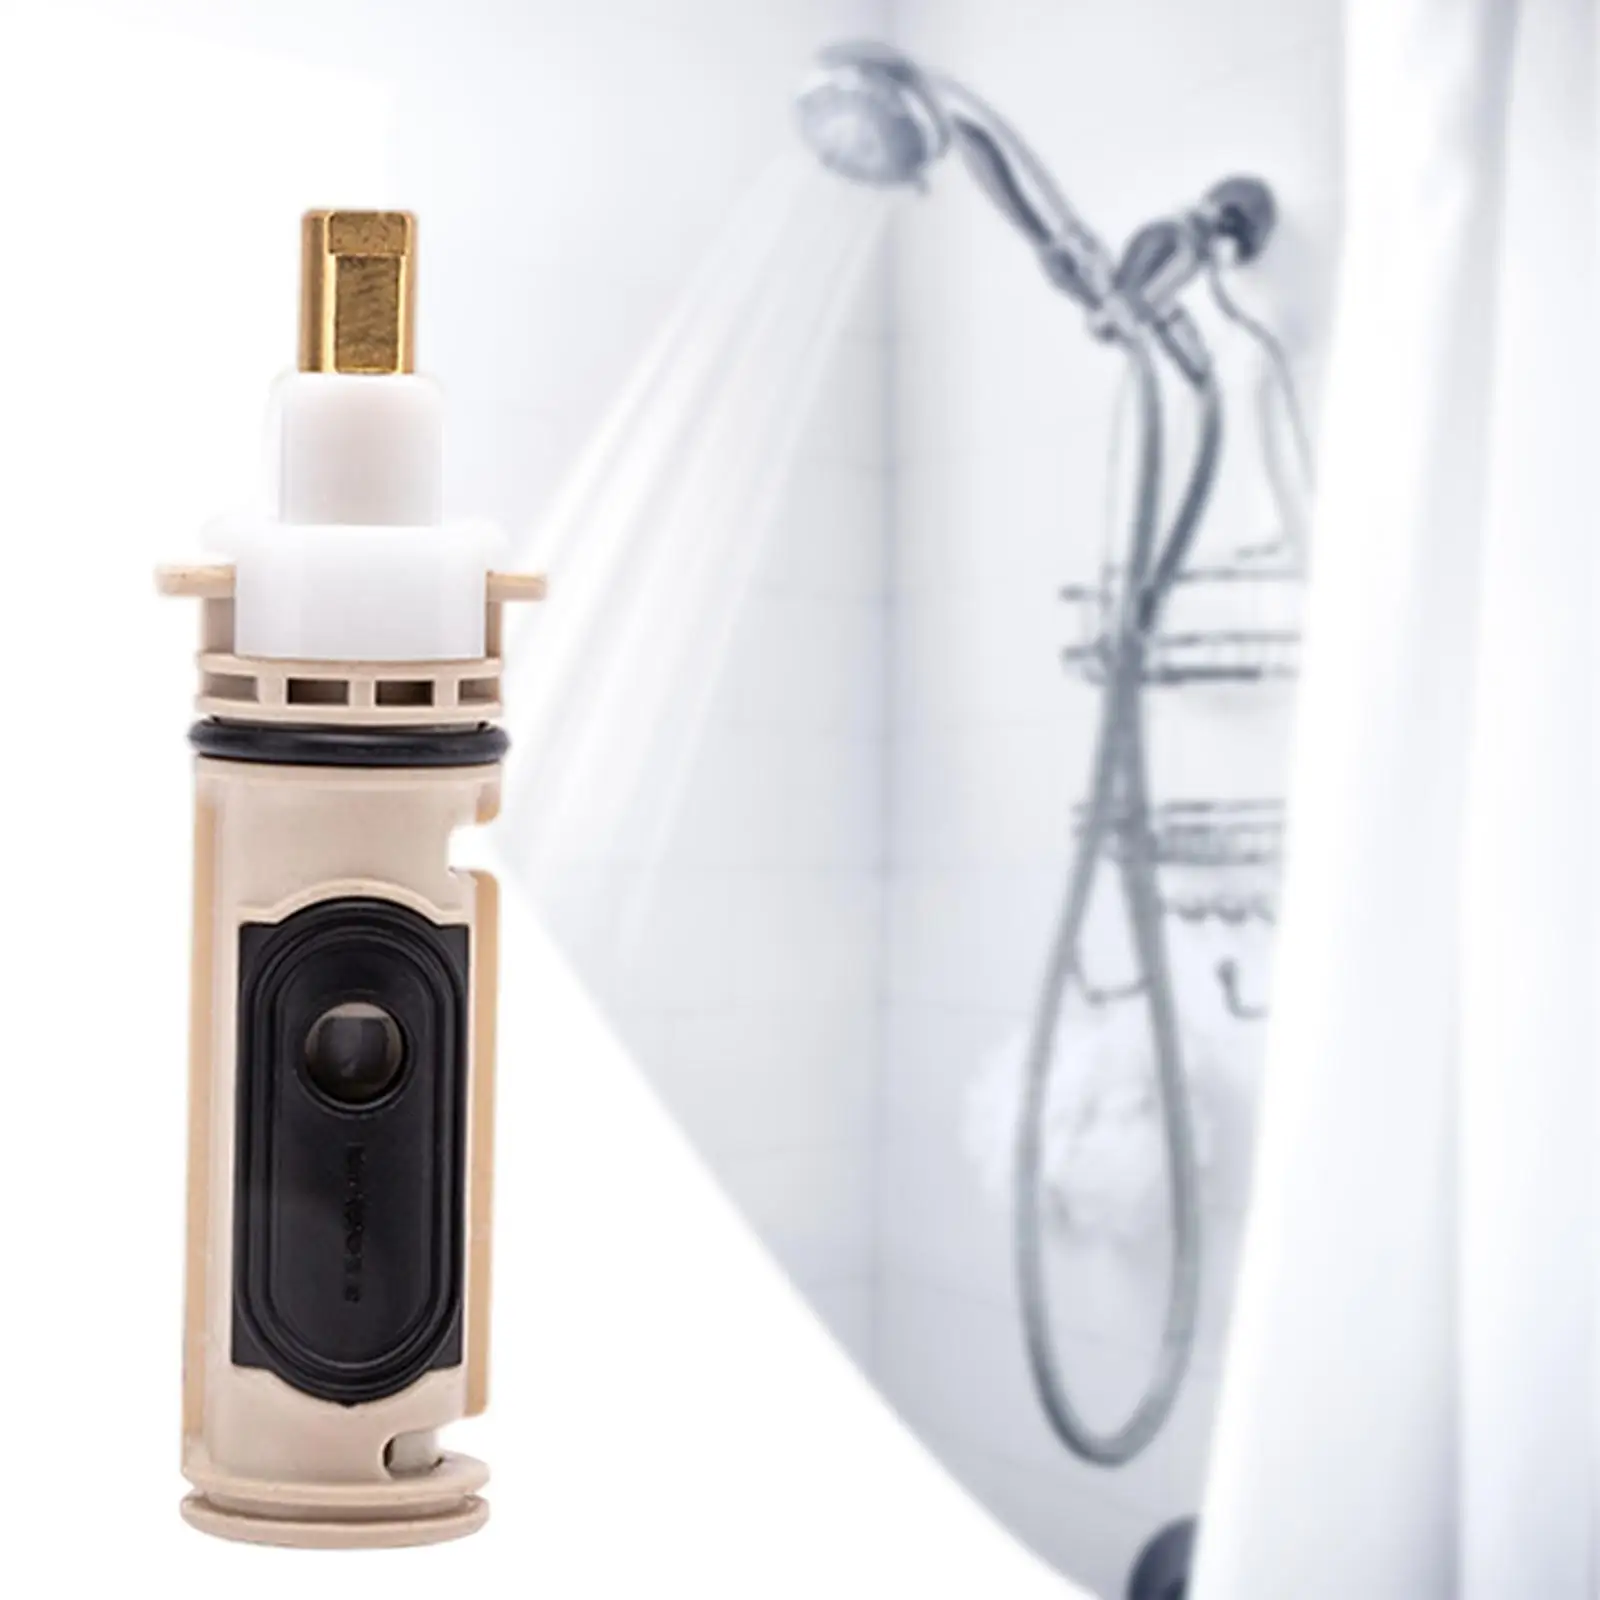 1 Piece Shower Cartridge Replacement Single Handle Faucets Valve Repair for Bath Tub Bathroom Accessories Kitchen